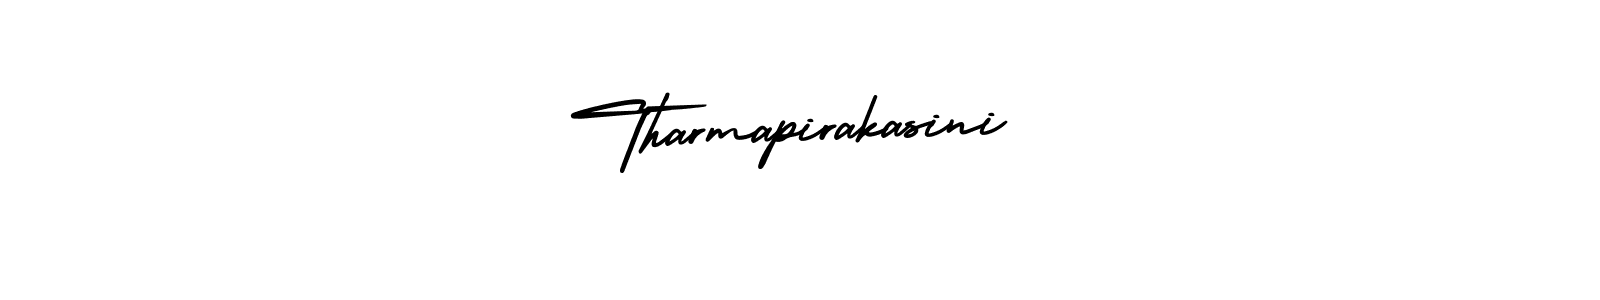 Design your own signature with our free online signature maker. With this signature software, you can create a handwritten (AmerikaSignatureDemo-Regular) signature for name Tharmapirakasini. Tharmapirakasini signature style 3 images and pictures png